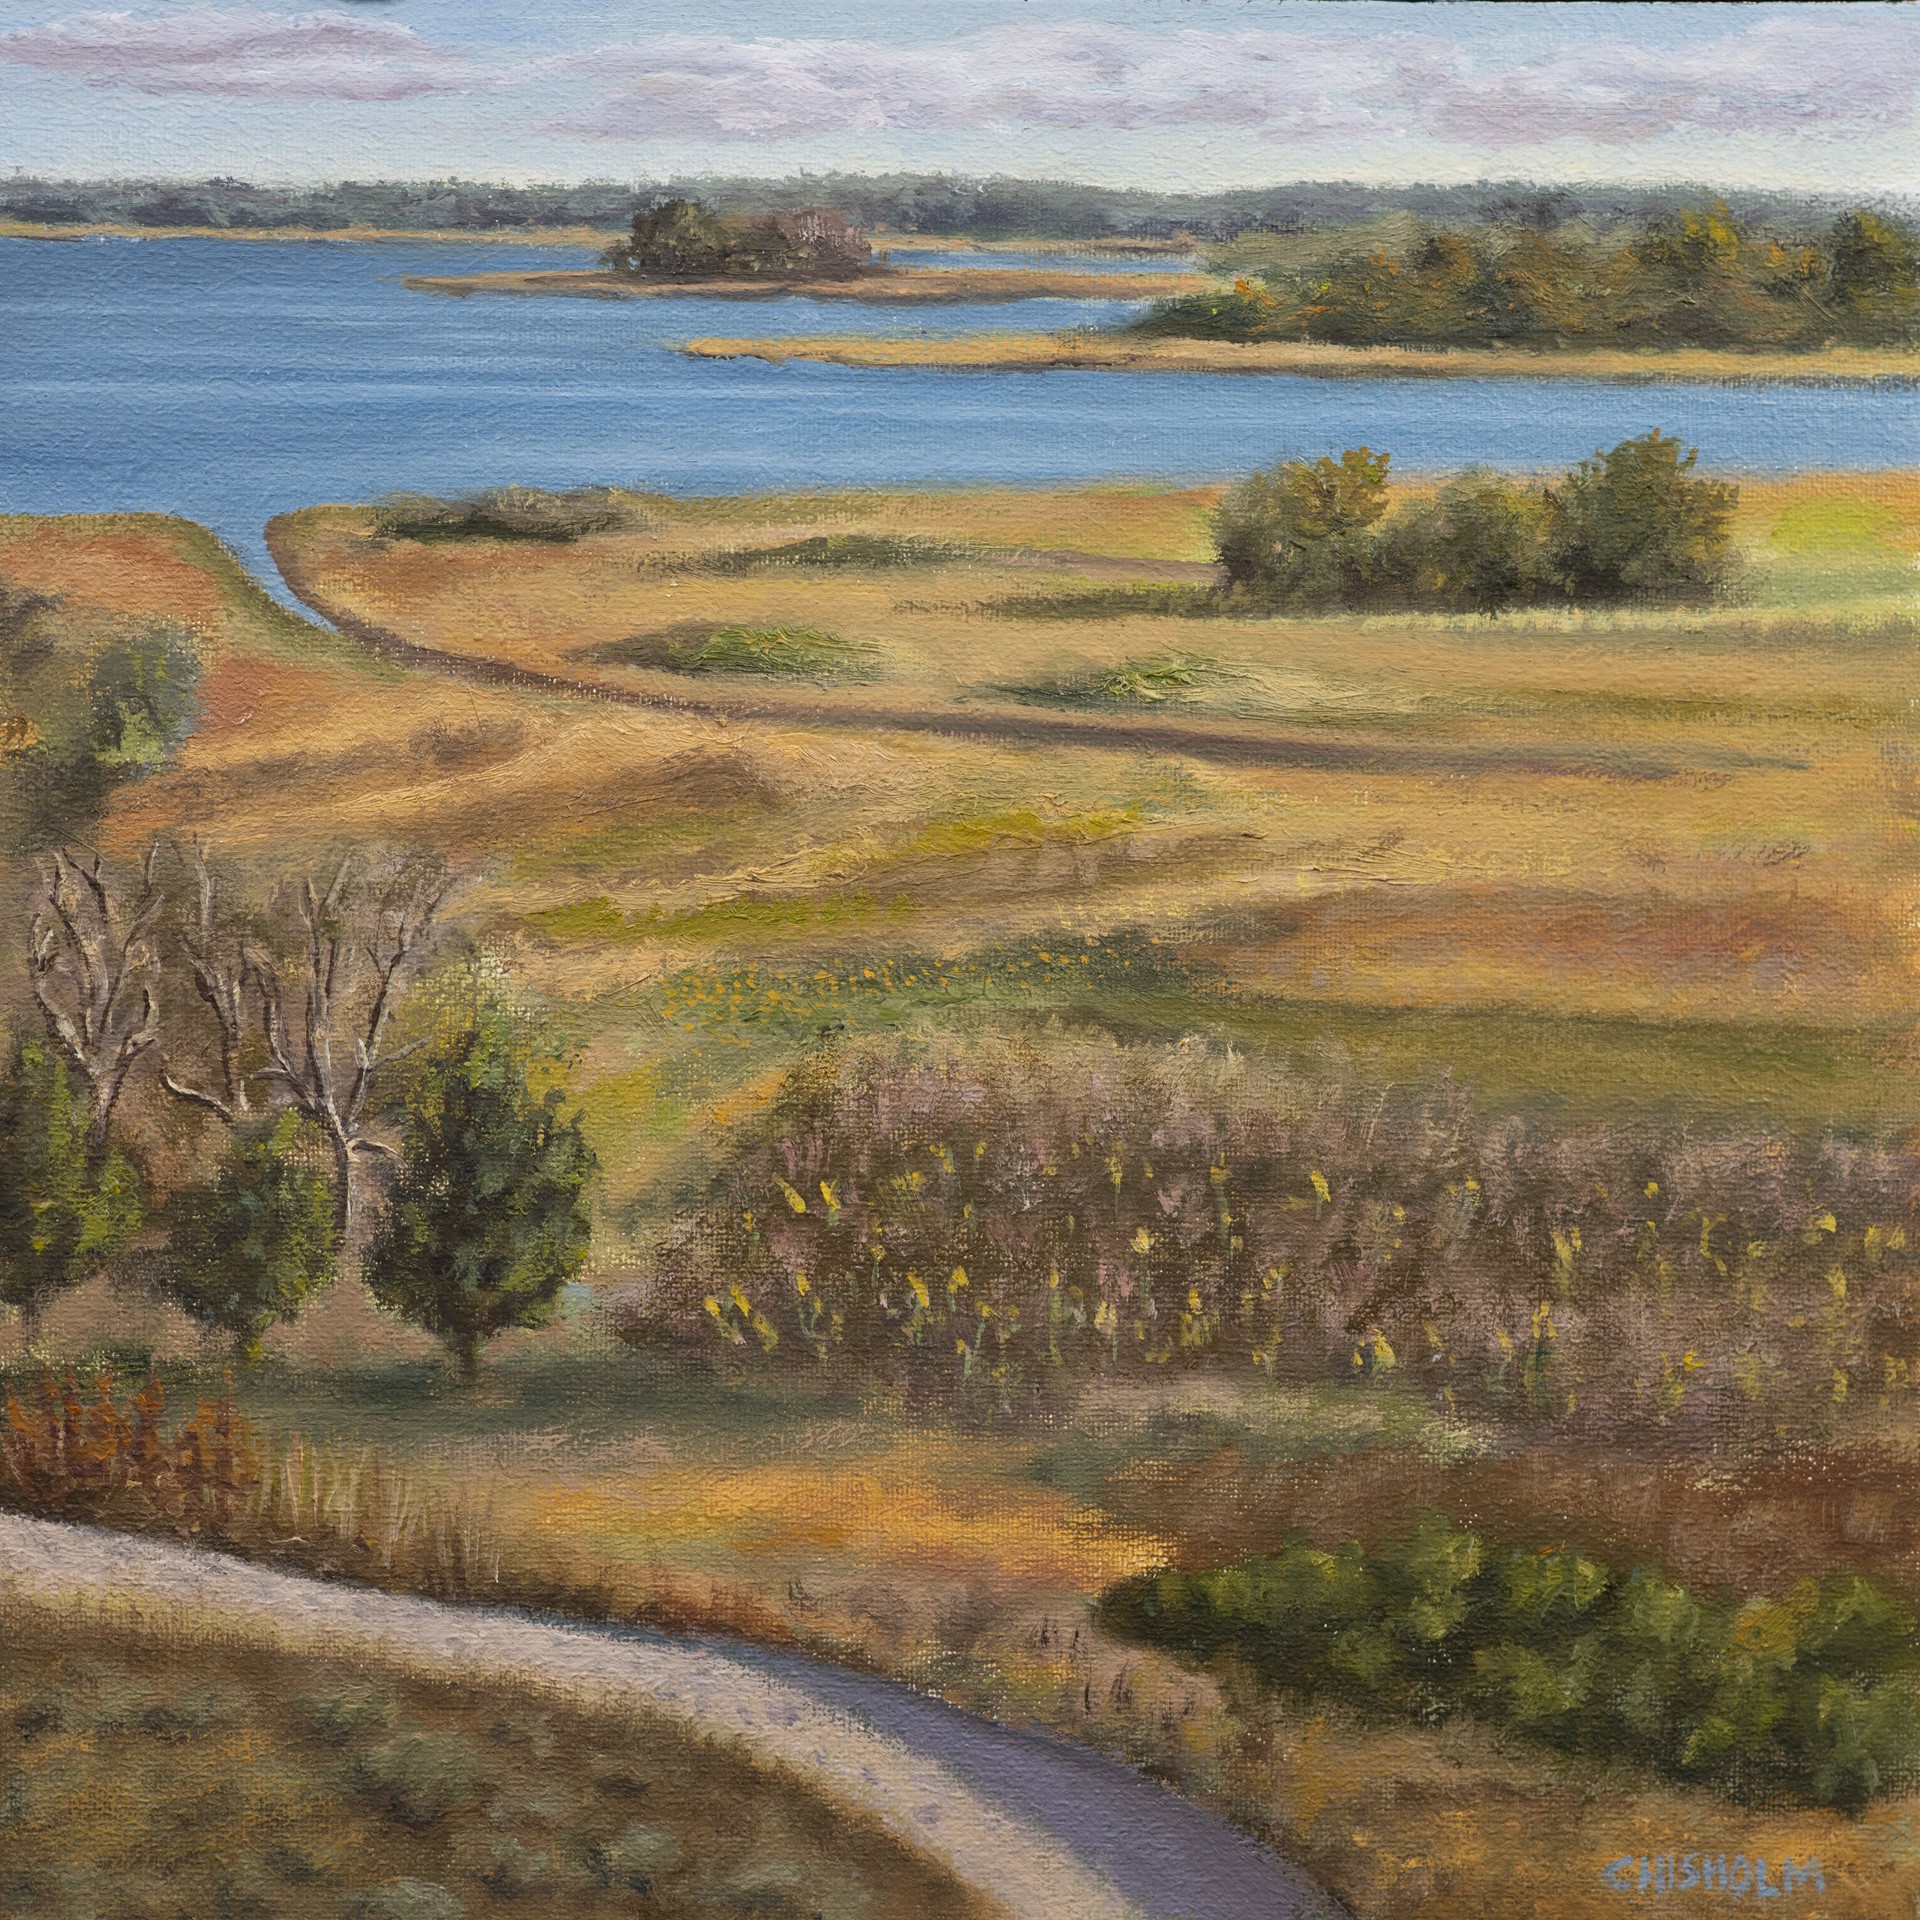 Crane's Trail by Bill Chisholm